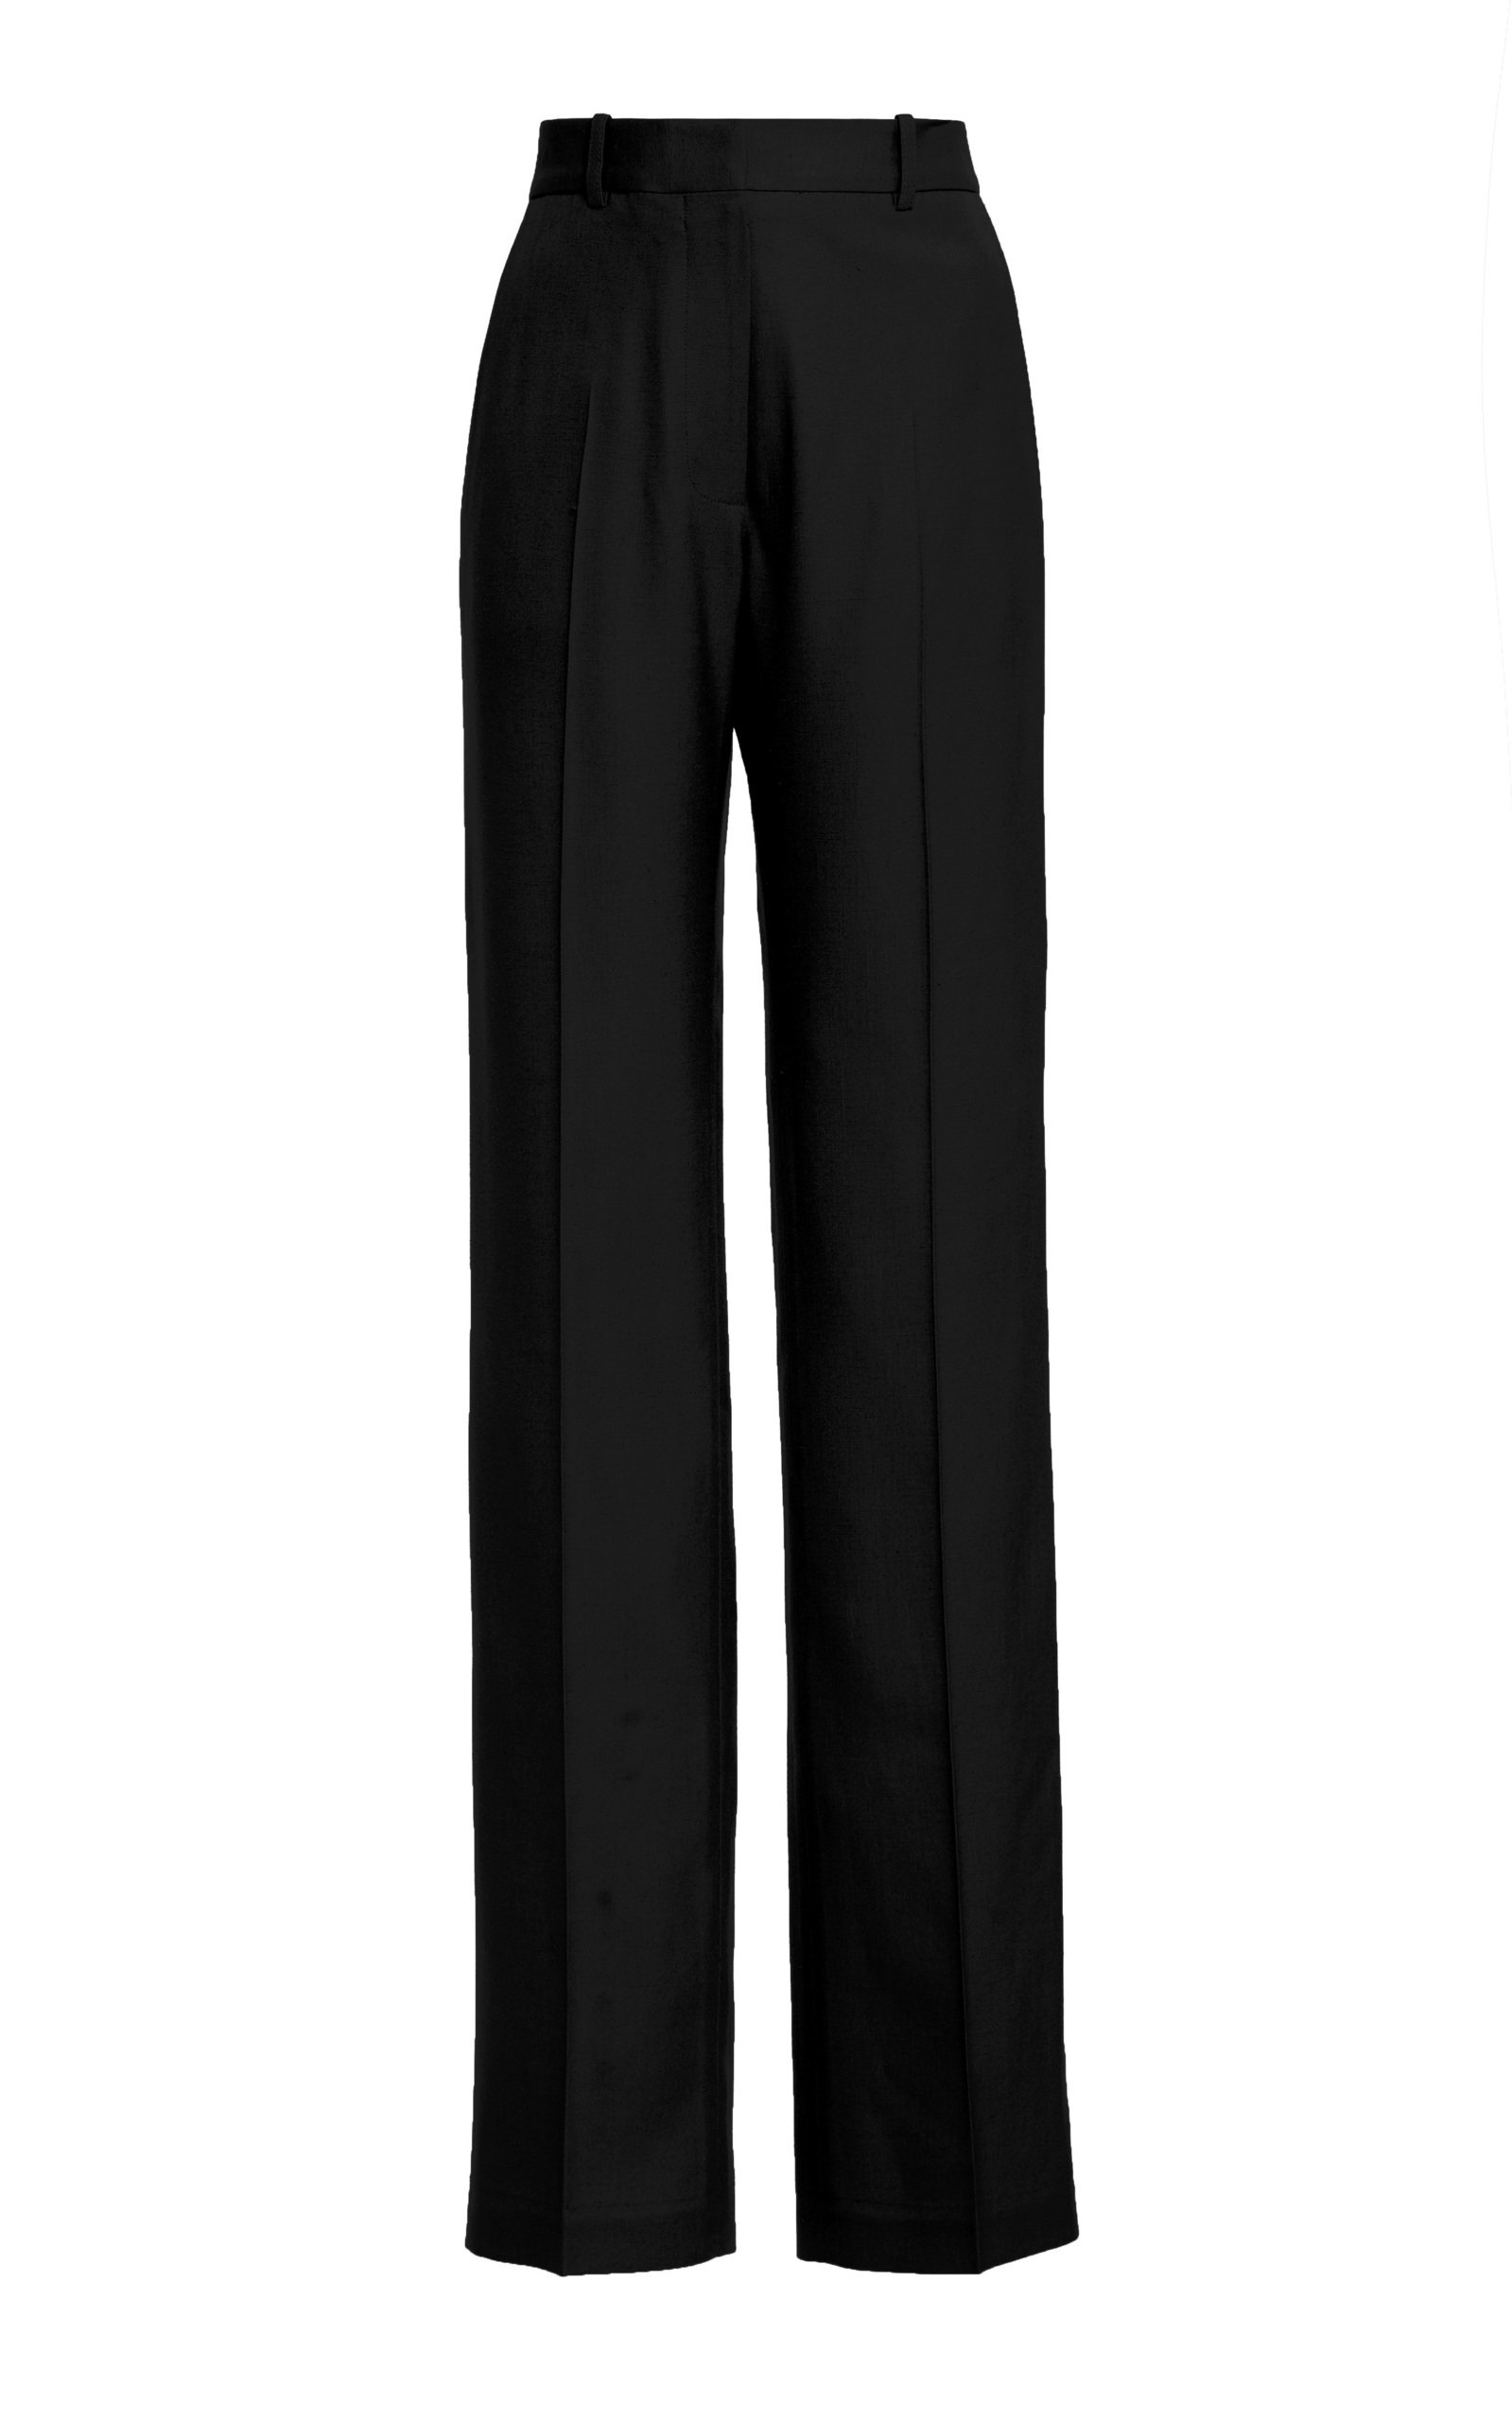 Victoria Beckham Women's Tailored Slim Pants